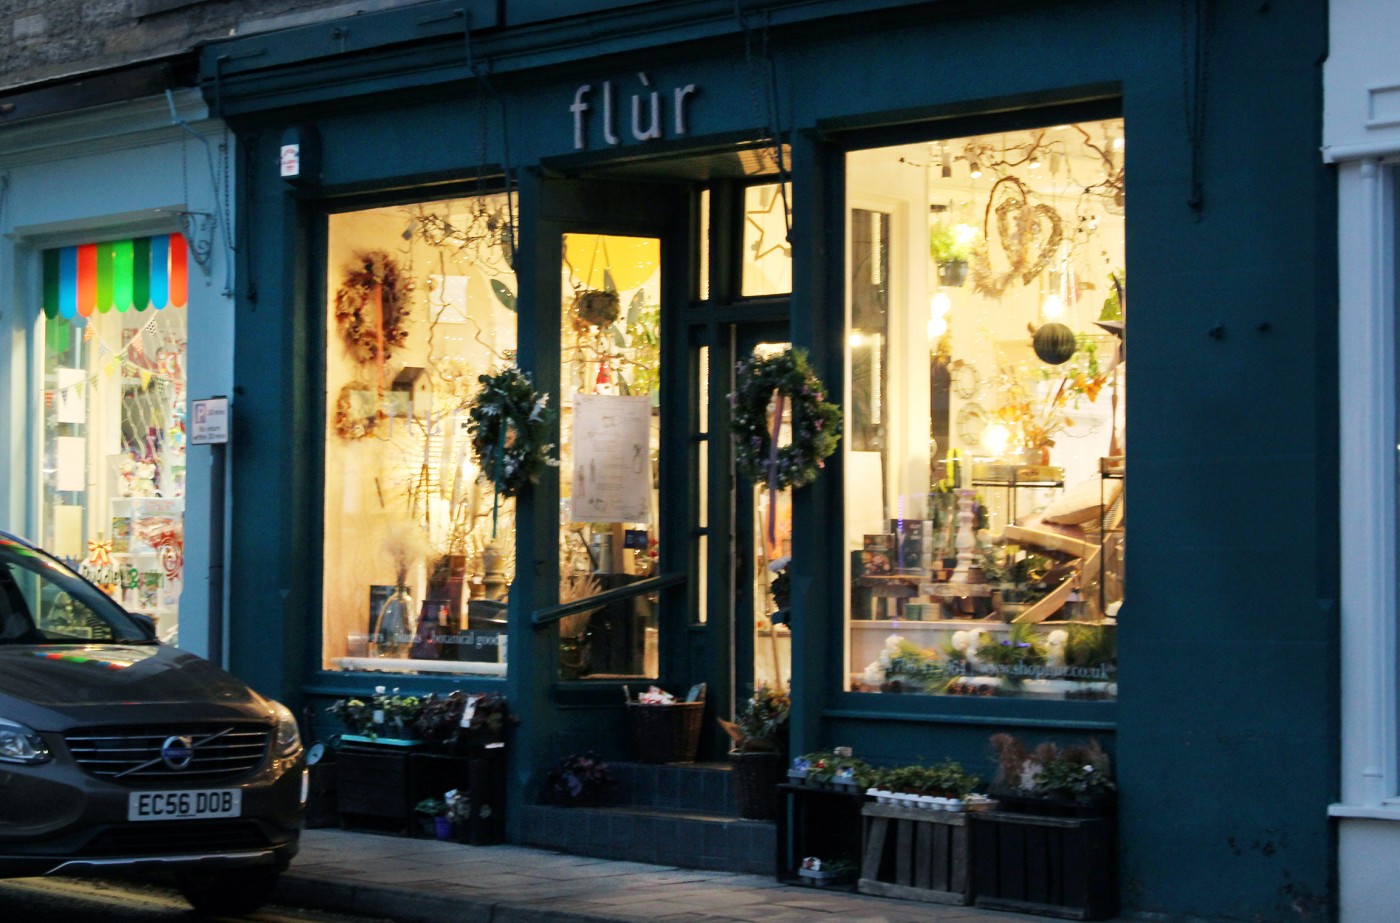 Flur flower shop